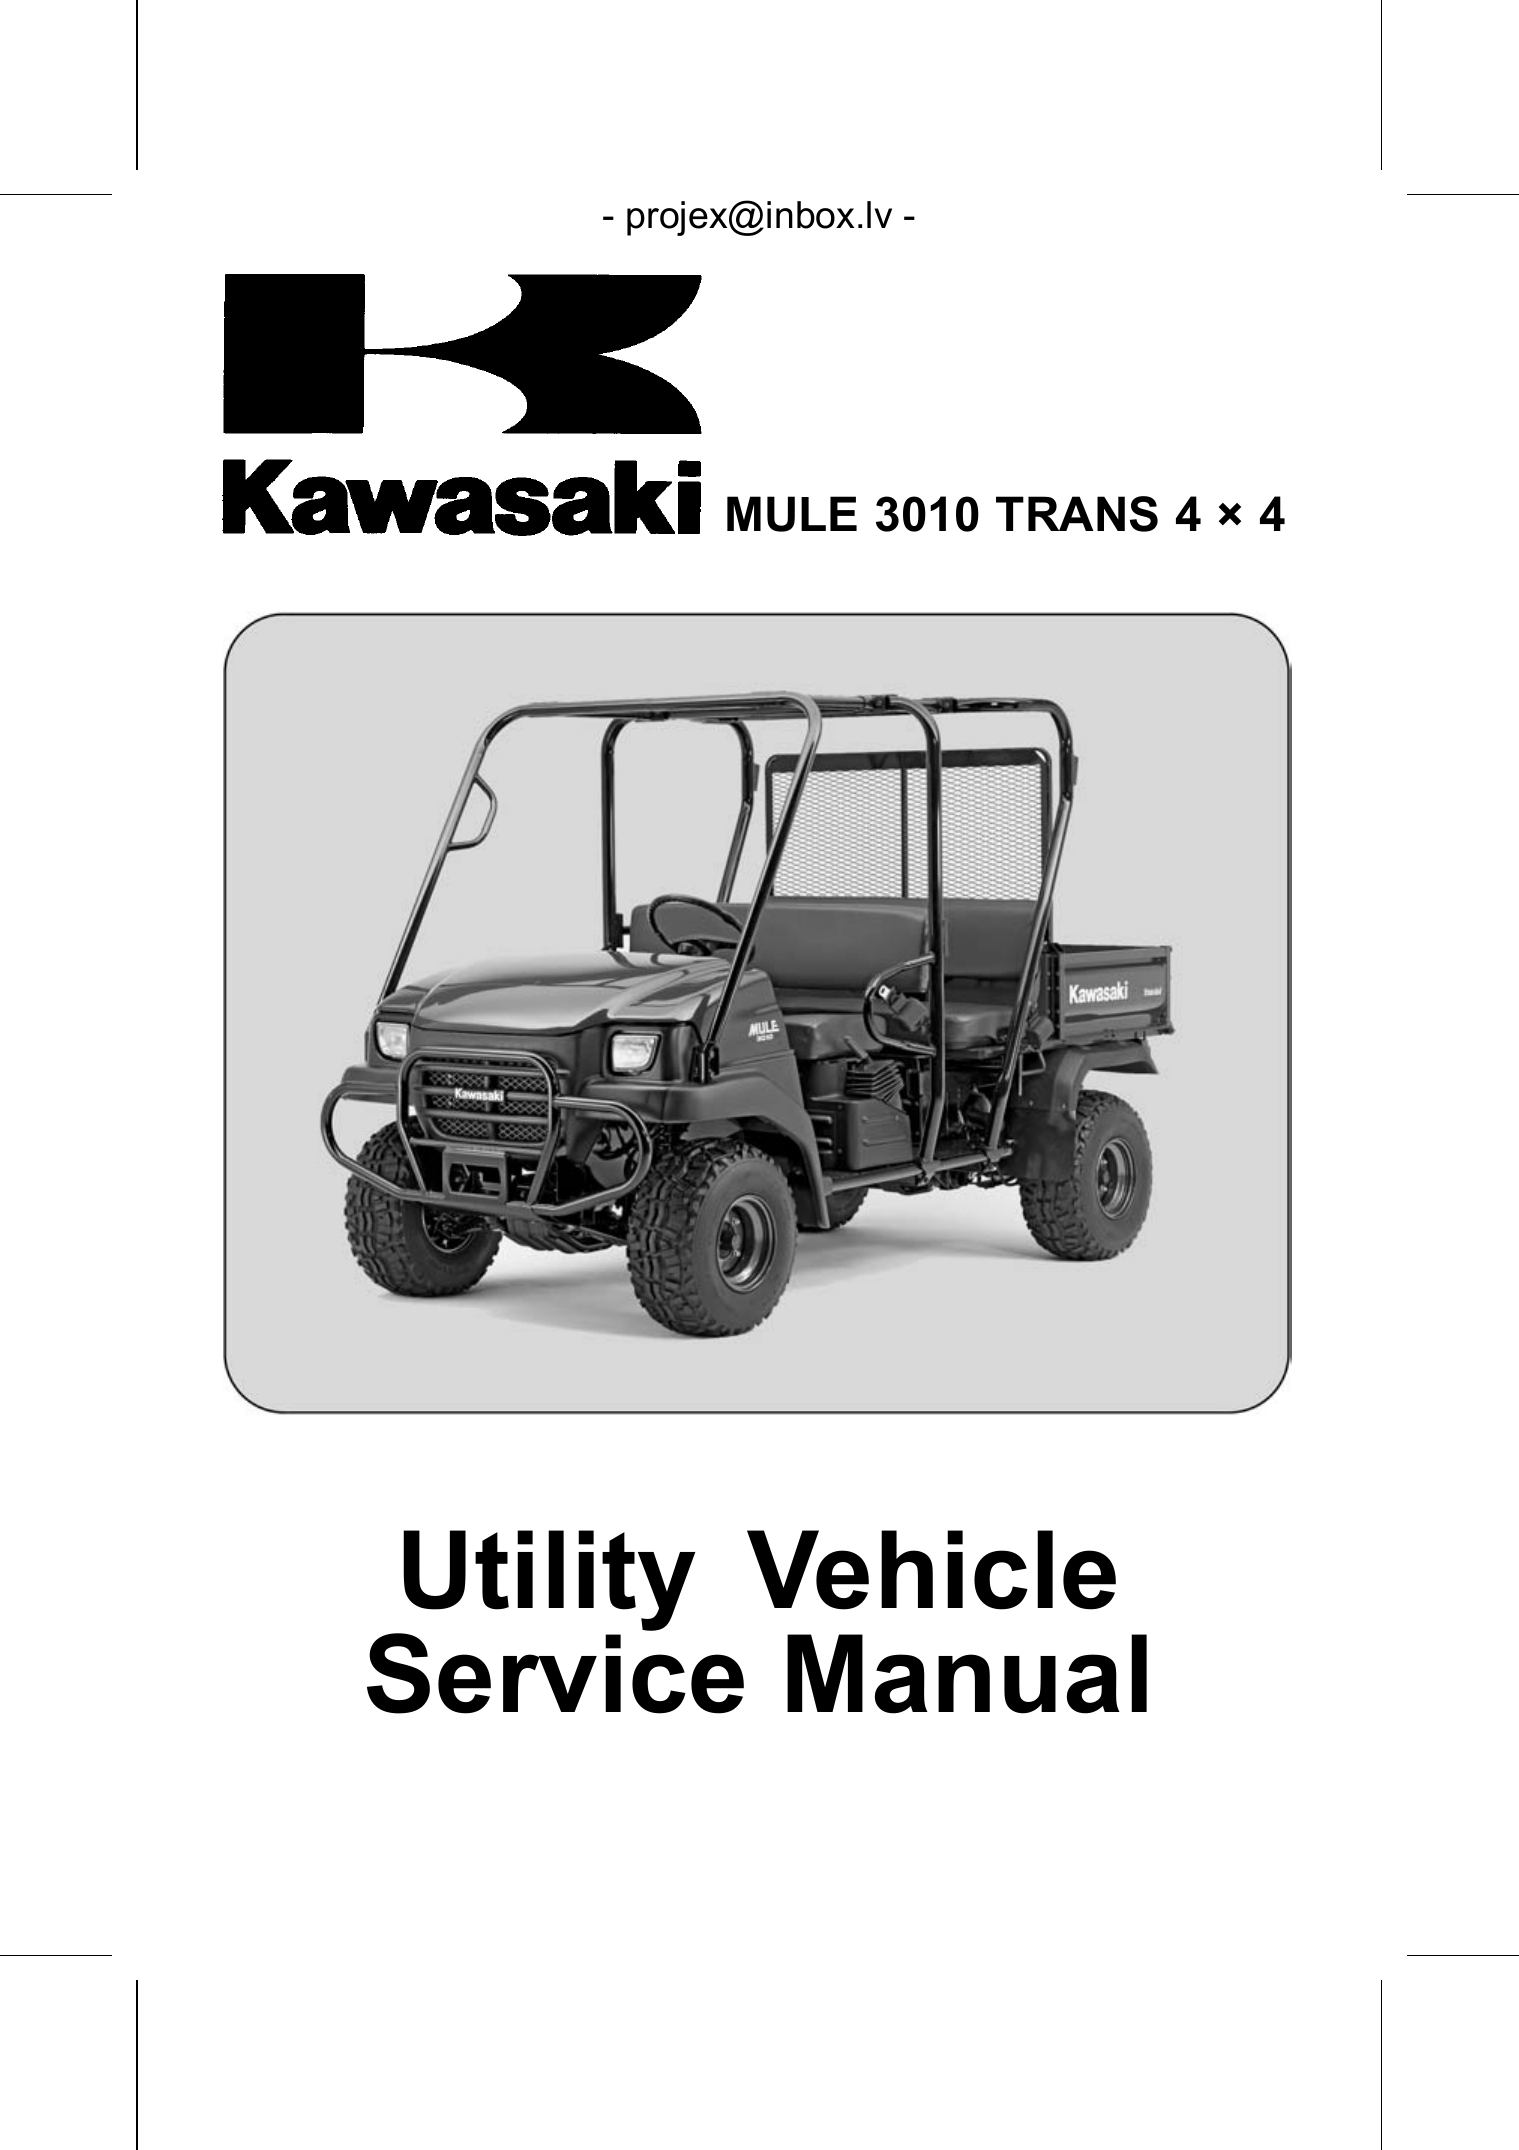 2005-2009 Kawasaki KAF620, KAF620J, KAF620K, Mule 3010 Trans 4x4 service manual Preview image 1